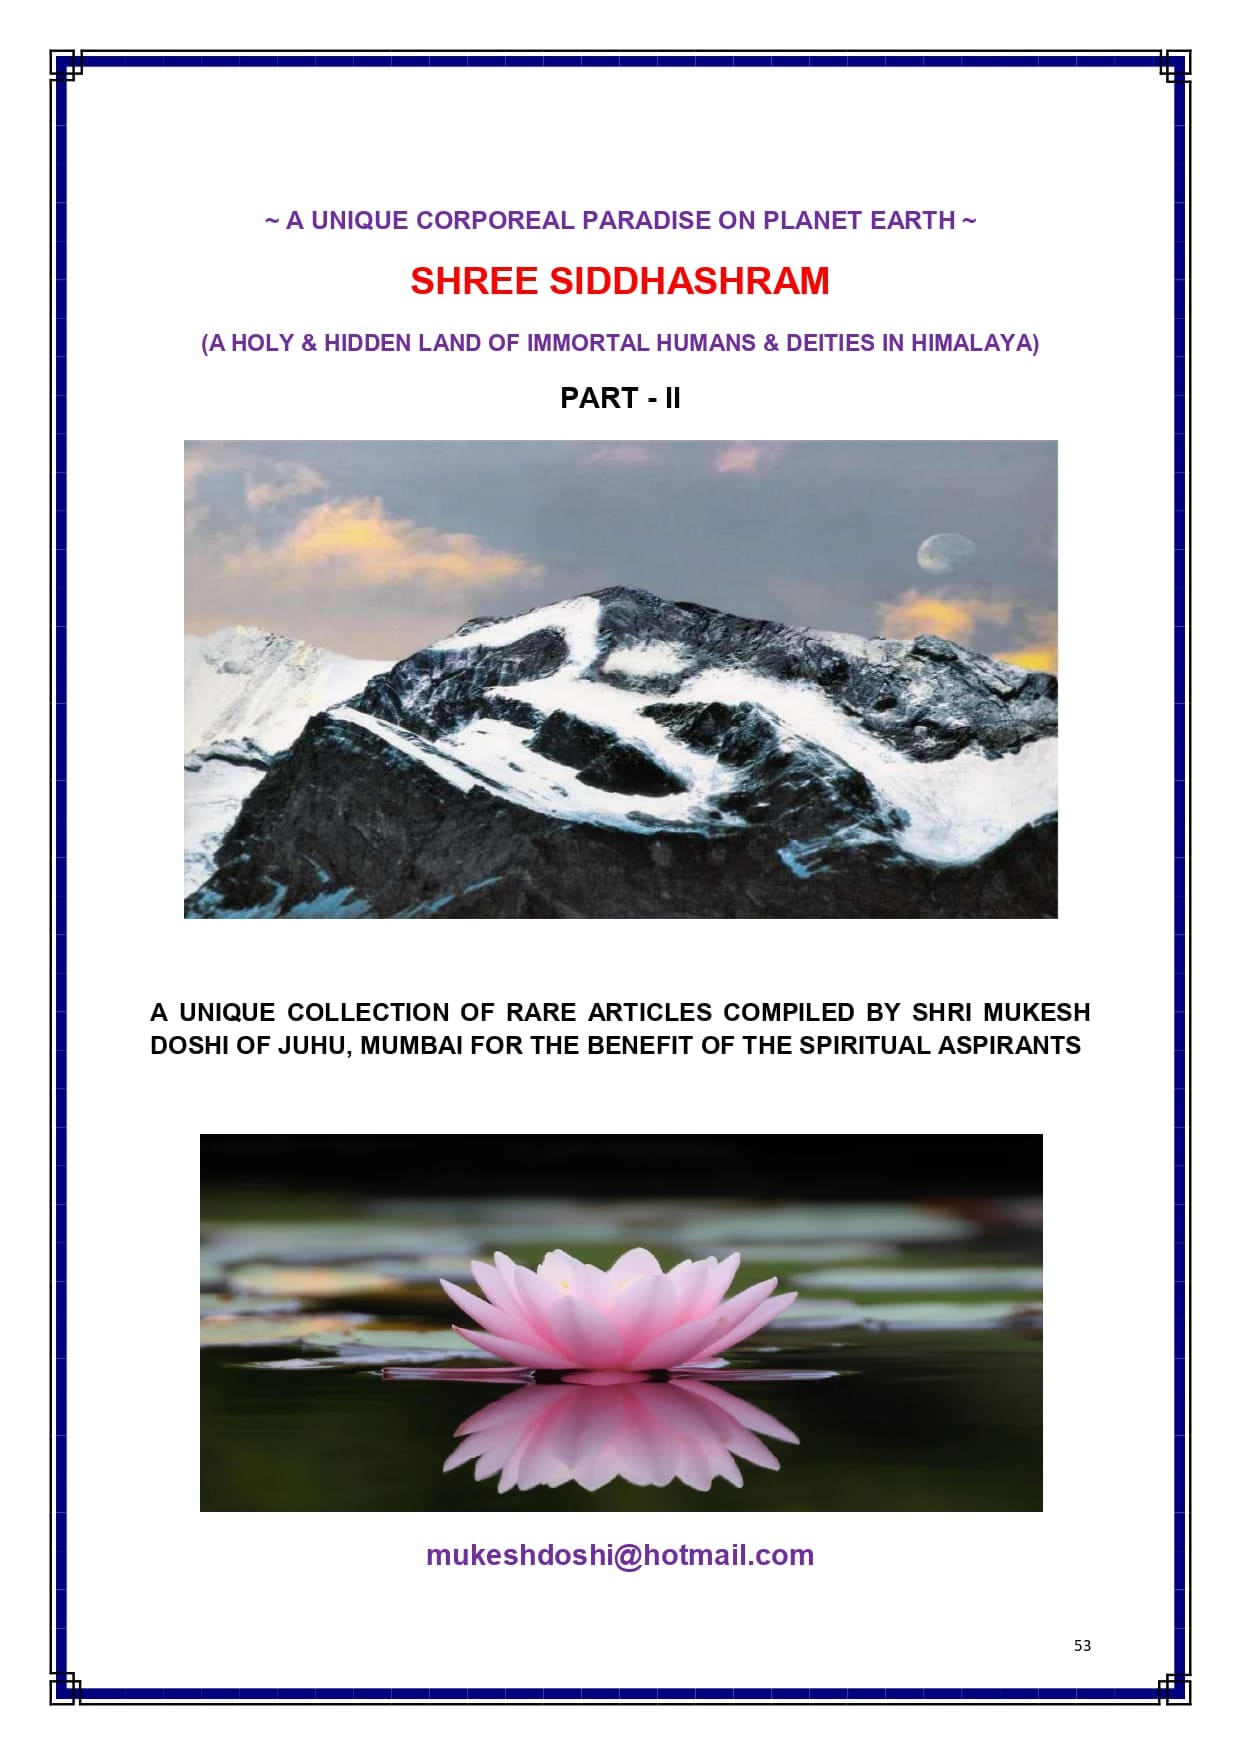 Shree Siddhashram